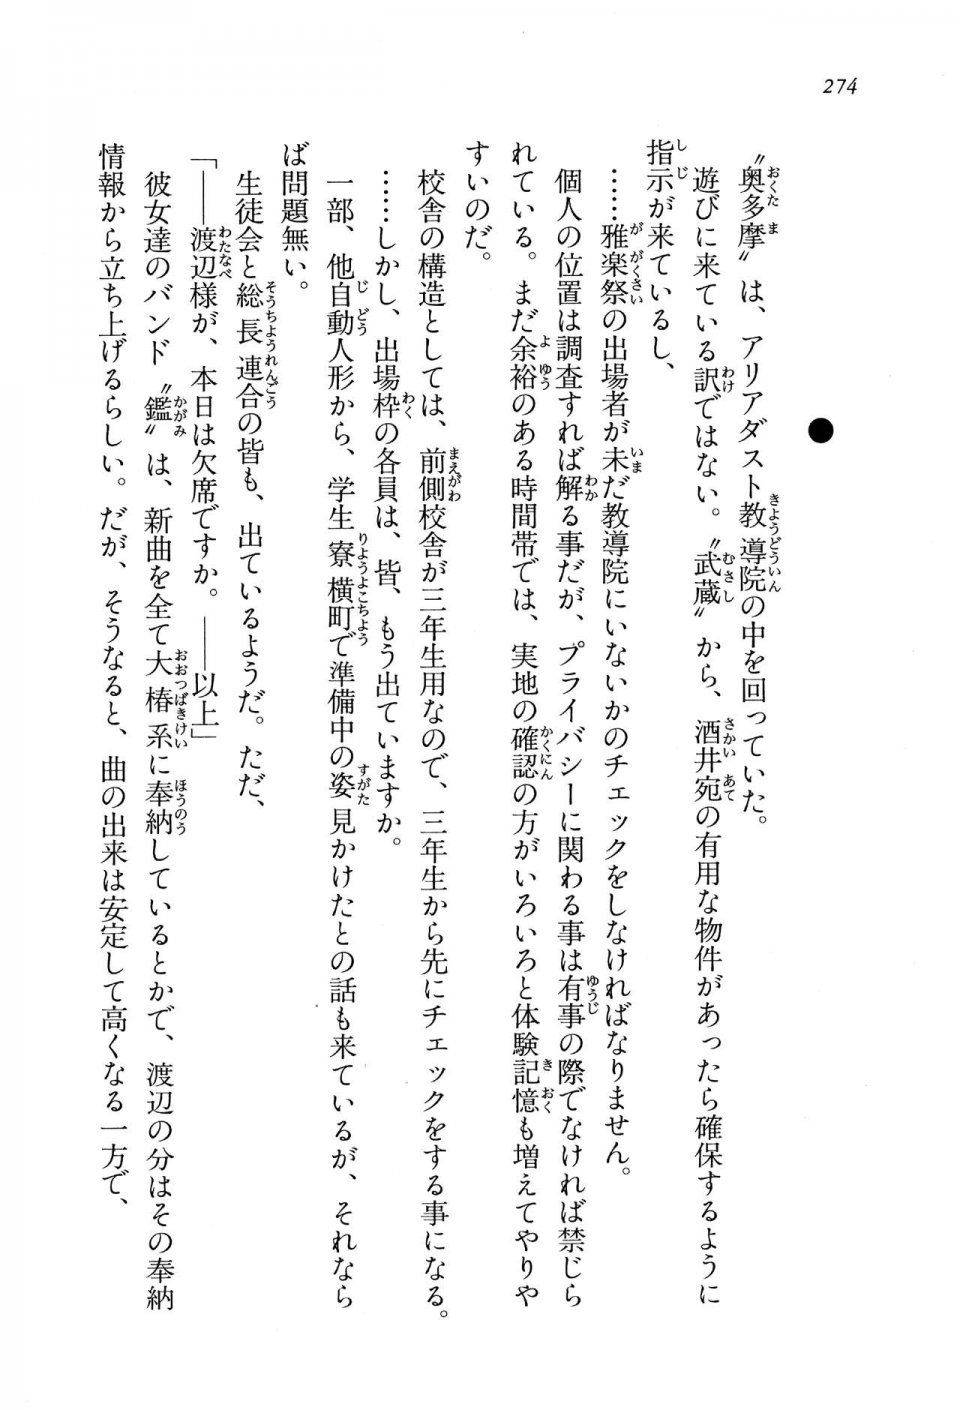 Kyoukai Senjou no Horizon BD Special Mininovel Vol 8(4B) - Photo #278